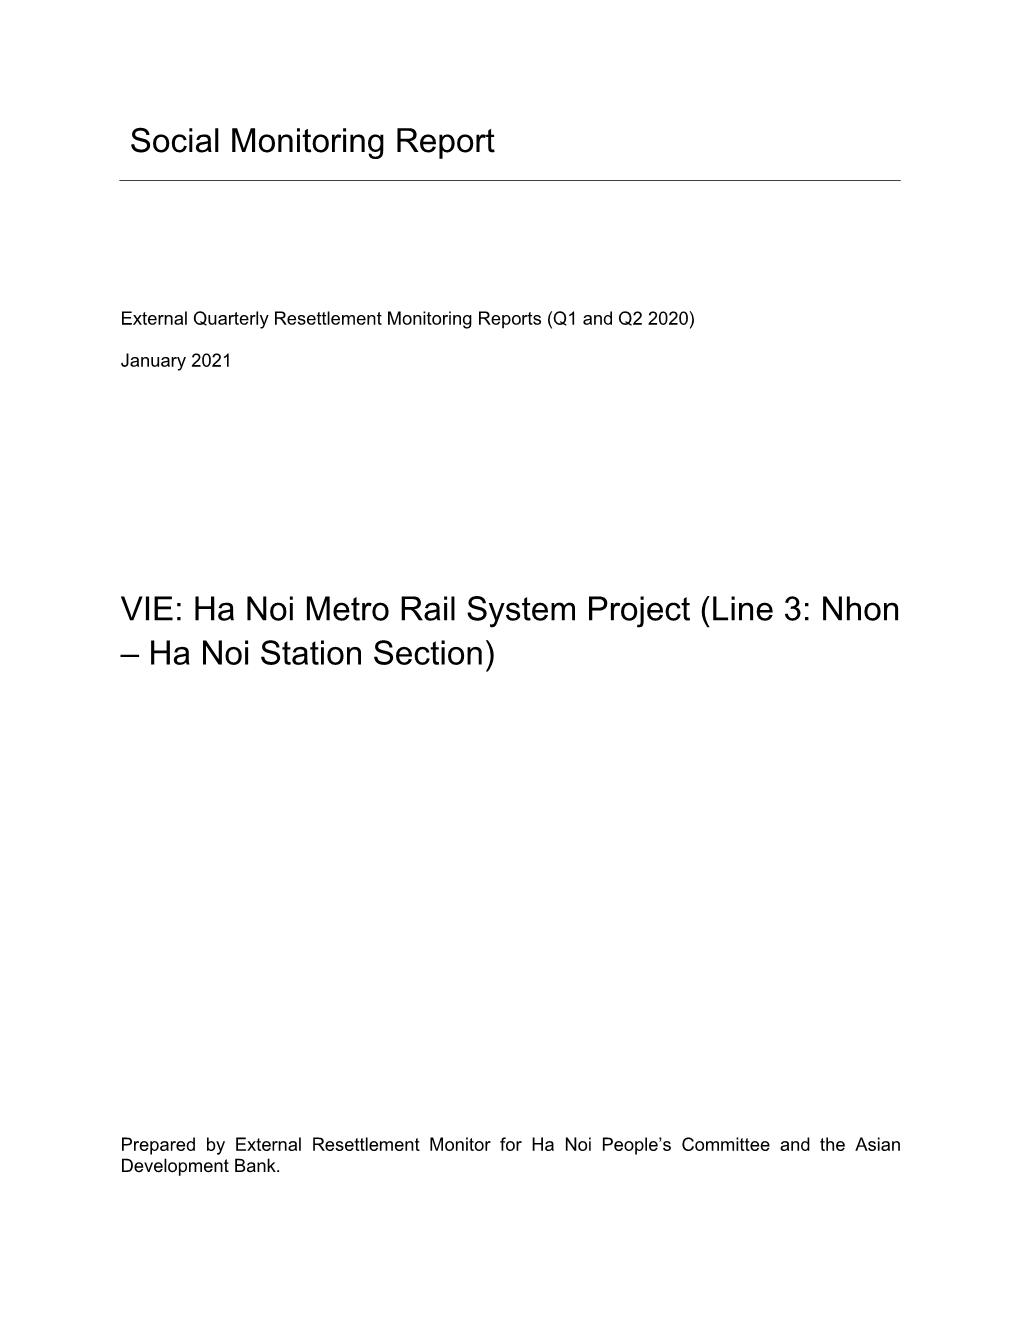 Social Monitoring Report VIE: Ha Noi Metro Rail System Project